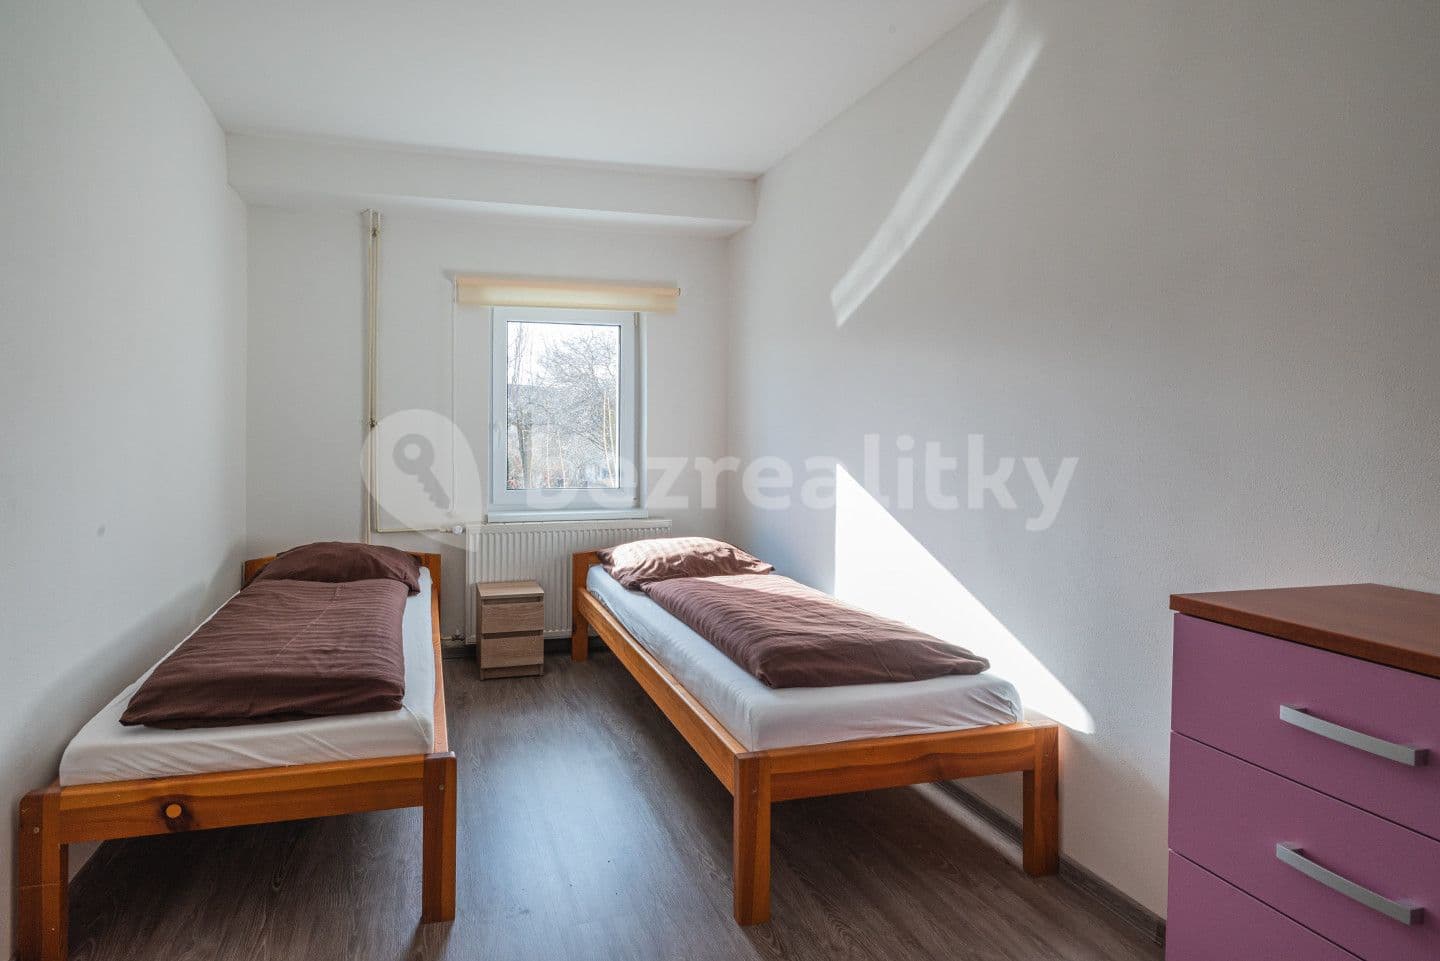 Predaj bytu 4-izbový 111 m², Staré Město, Moravskoslezský kraj